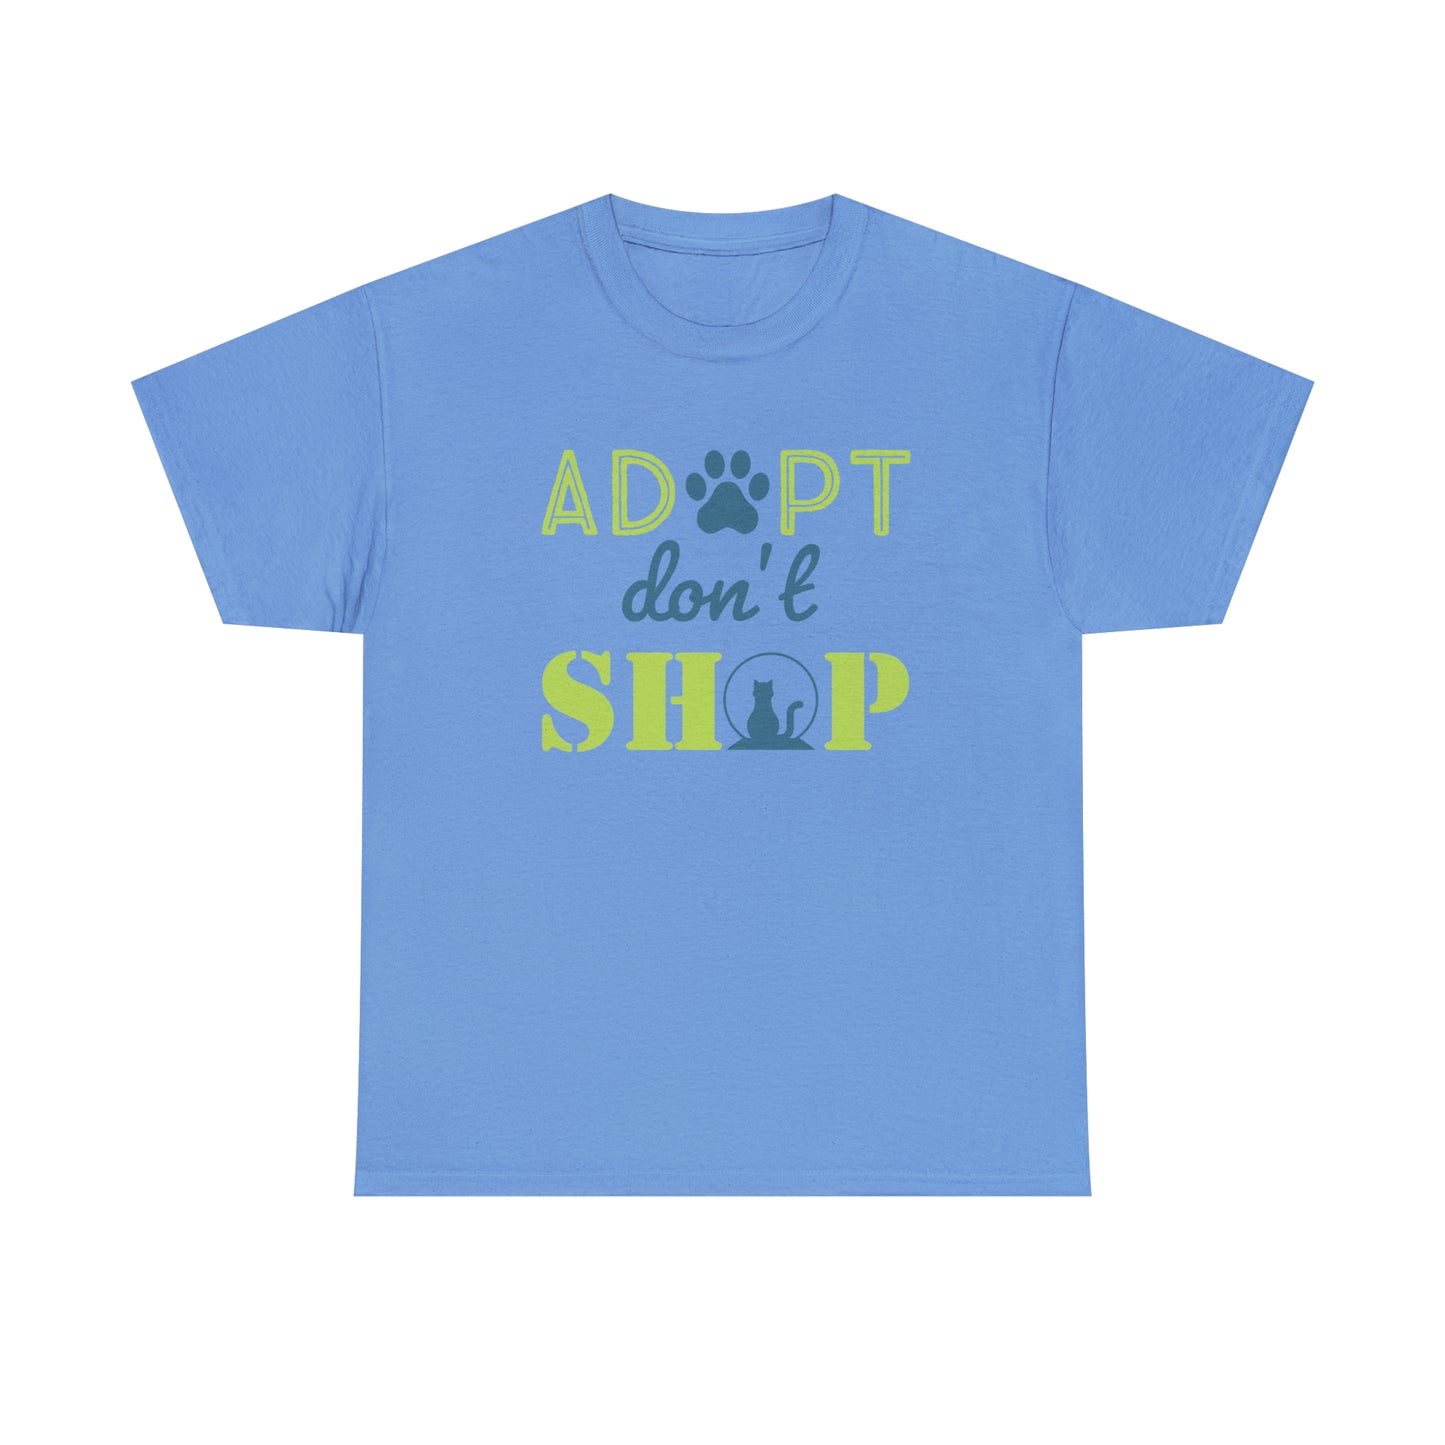 Pet Adoption T-Shirt For Pet Rescue TShirt For Animal Adoption T Shirt For Animal Rescue Shirt For Humane Shirt For Animal Advocate Shirt